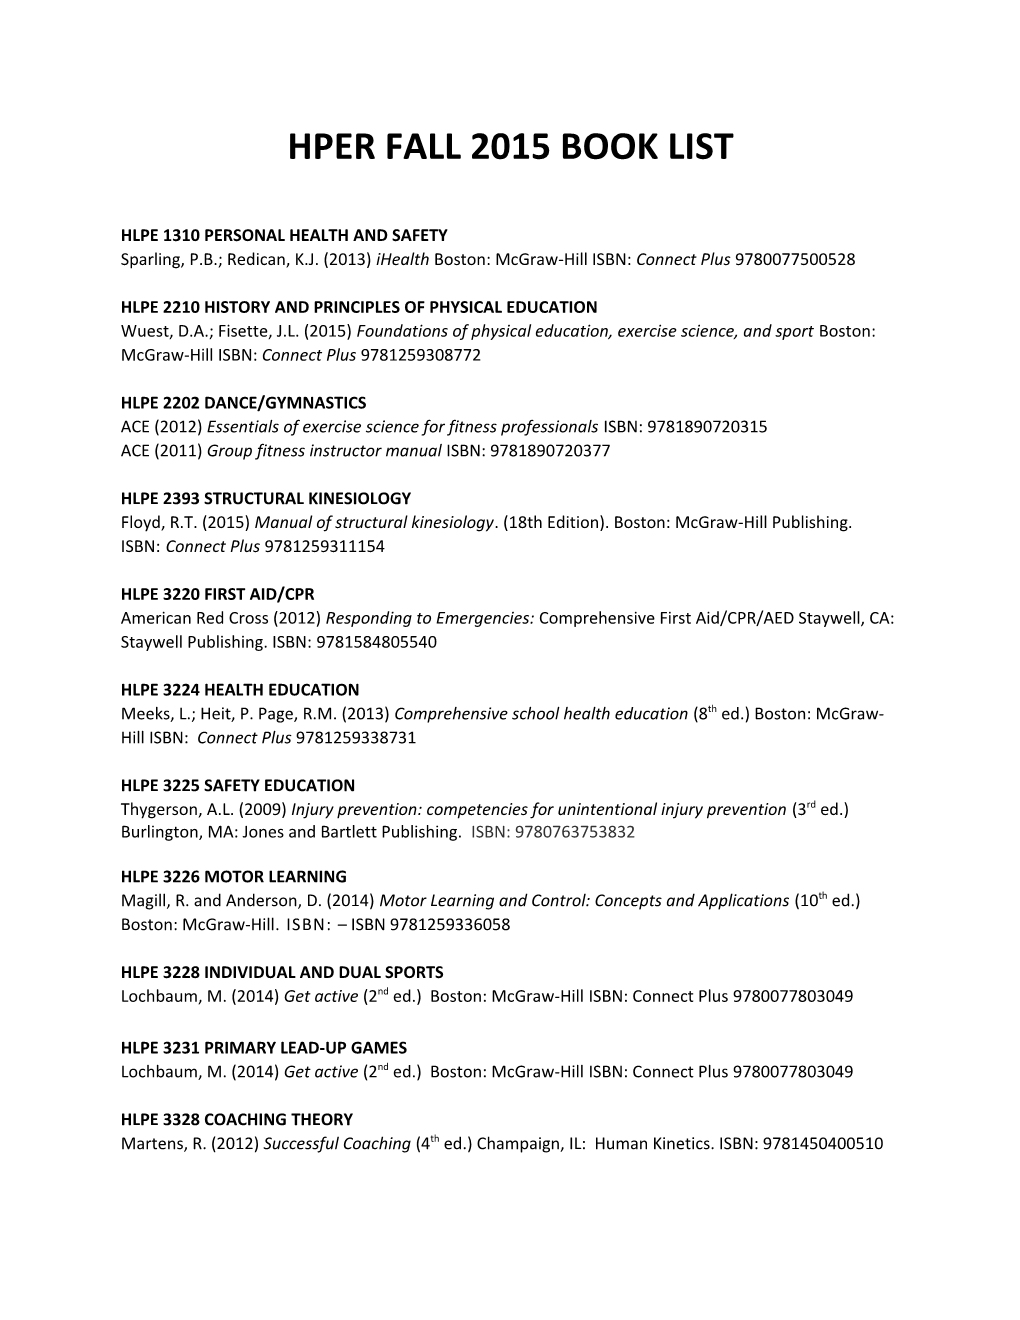 Hper Fall 2015 Book List